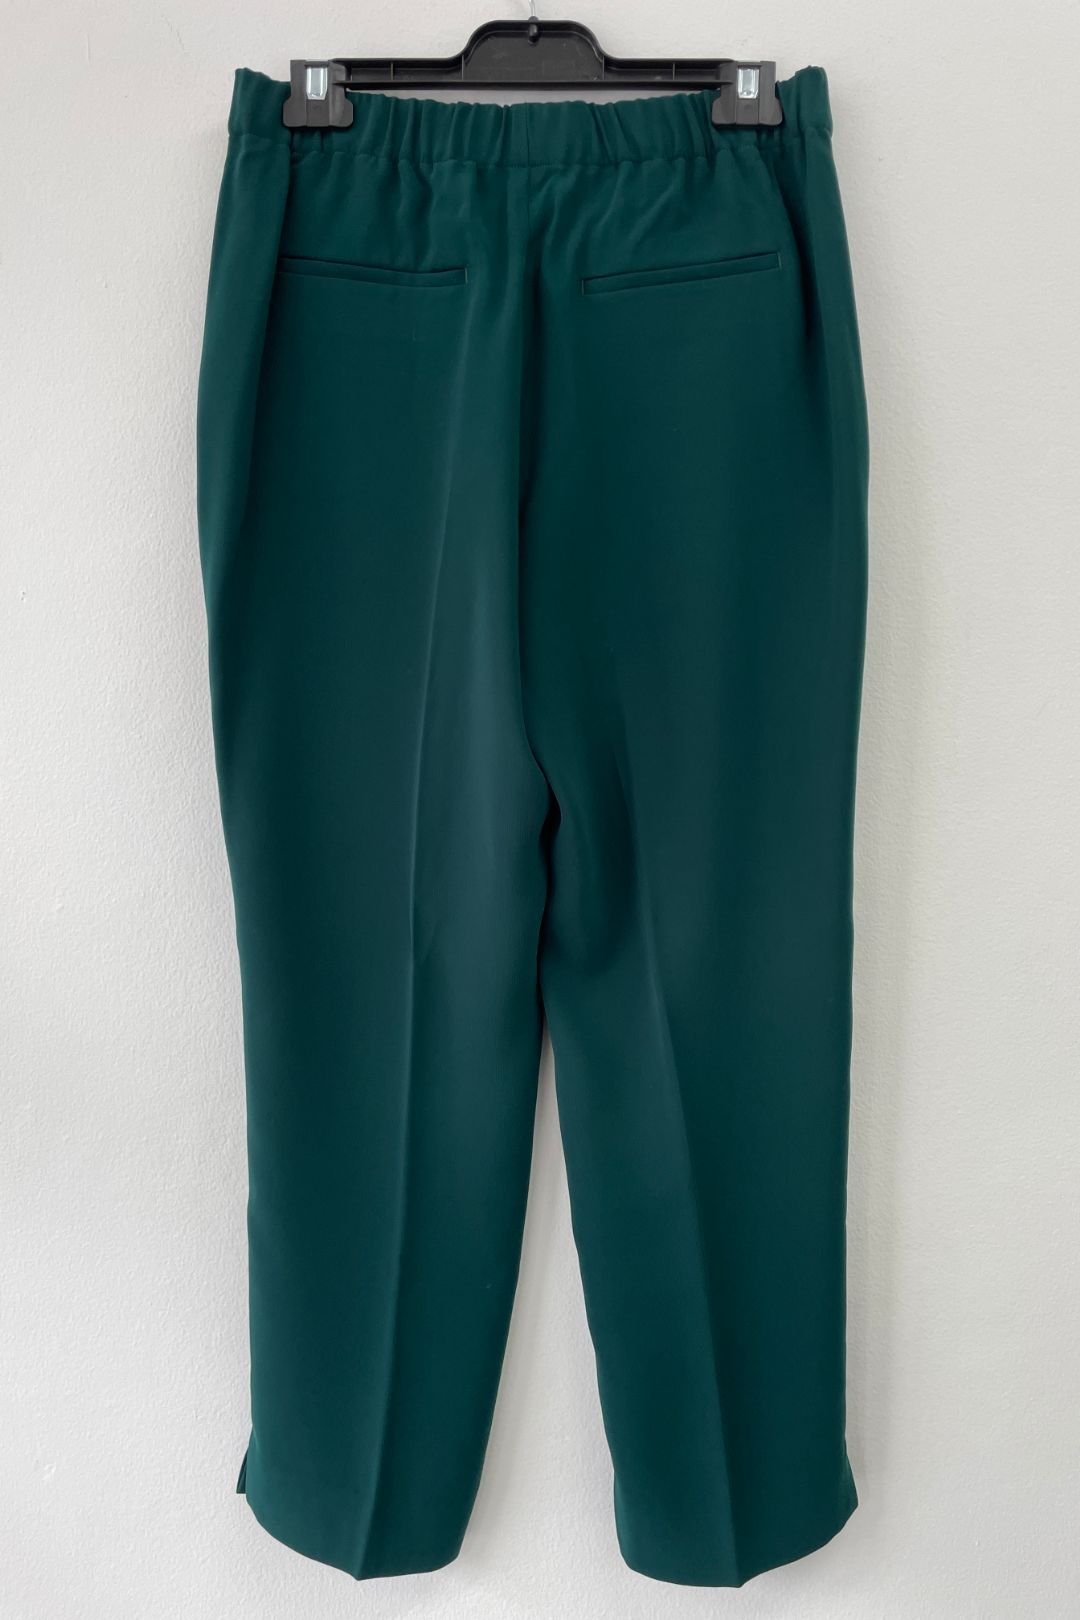 J.Crew - Green Crop Trousers